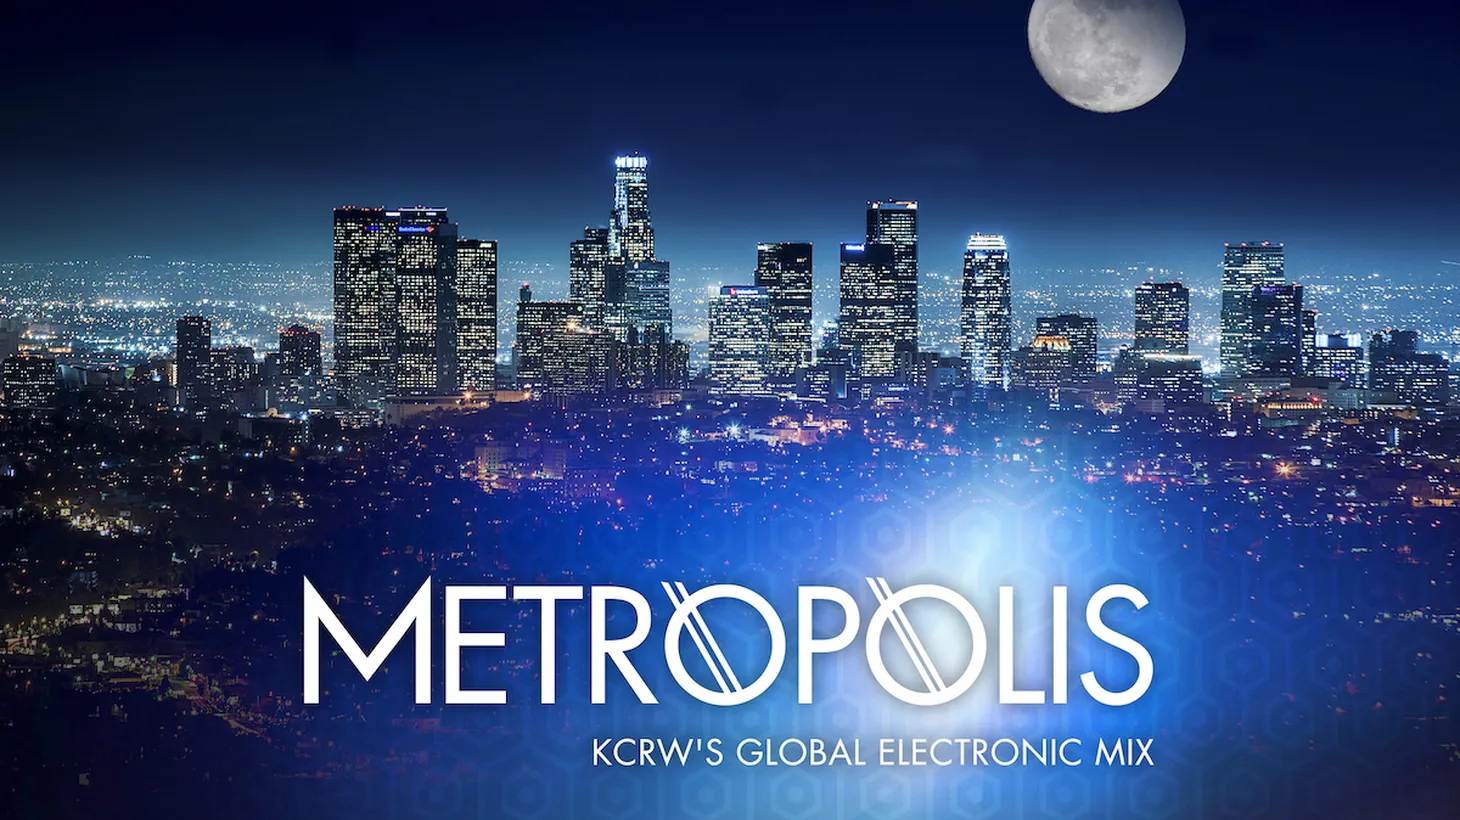 Ken Jordan and Scott Kirkland from the dance-based electronic outfit Crystal Method, slip into Metropolis.